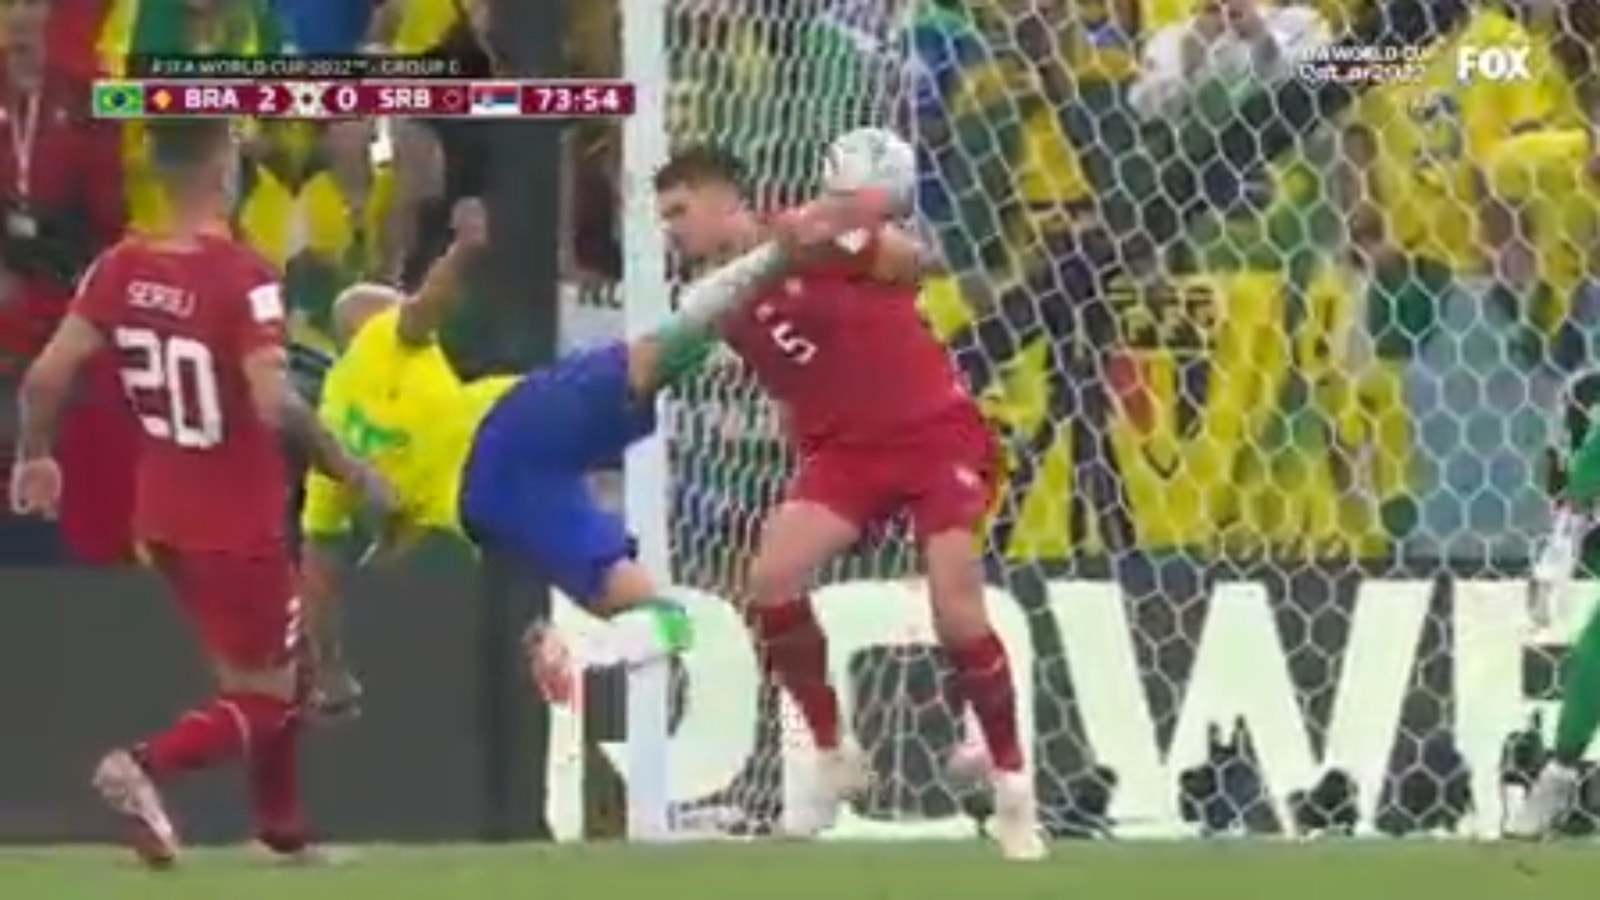 Richarlison puts Brazil 2-0 up with an acrobatic goal